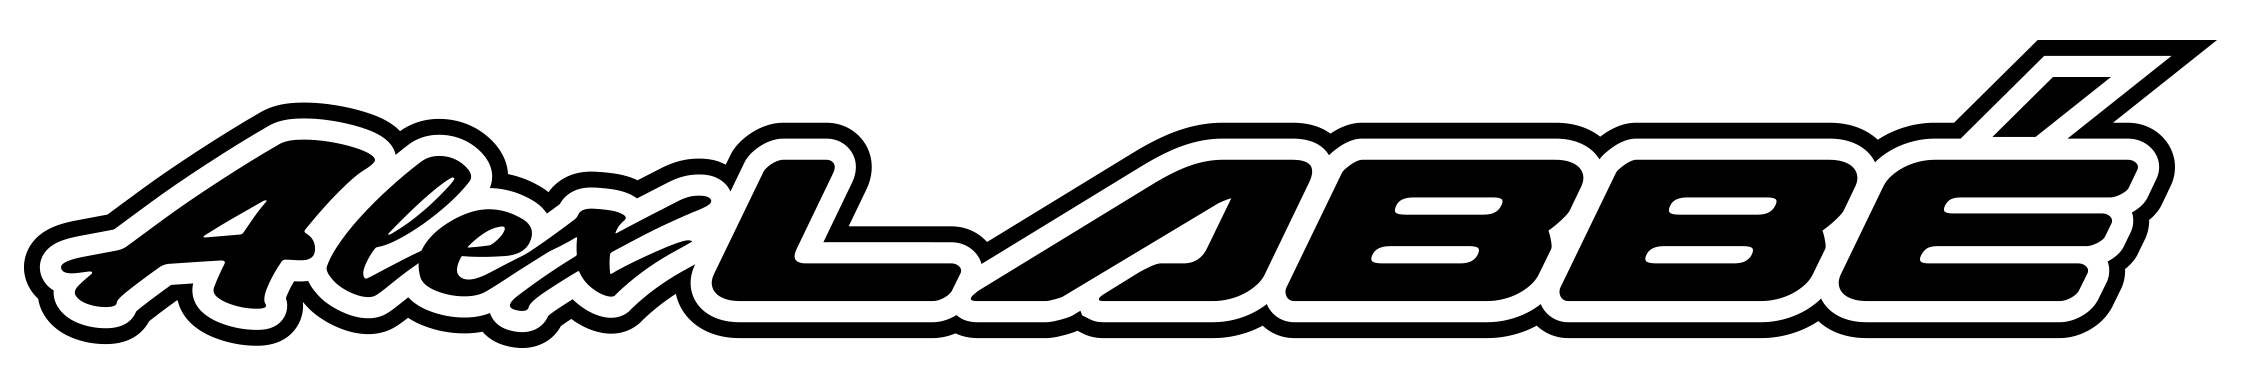 Alex Labbé Official Website - NASCAR Xfinity Driver